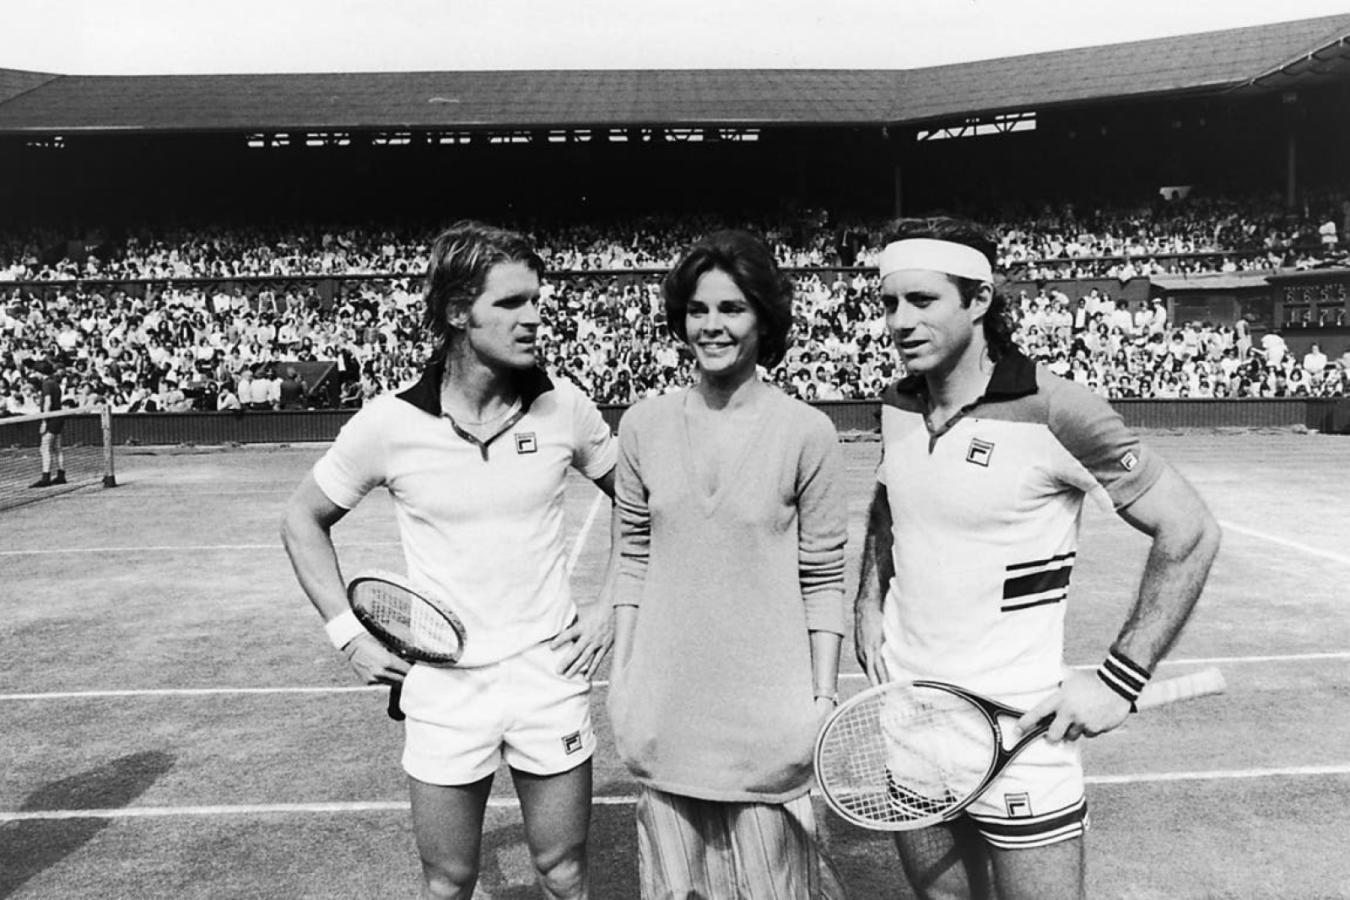 Imagen guillermo vilasChris Christensen (Dean Paul Martin), Nicole Boucher (Ali MacGraw) y Vilas, en la central de Wimbledon